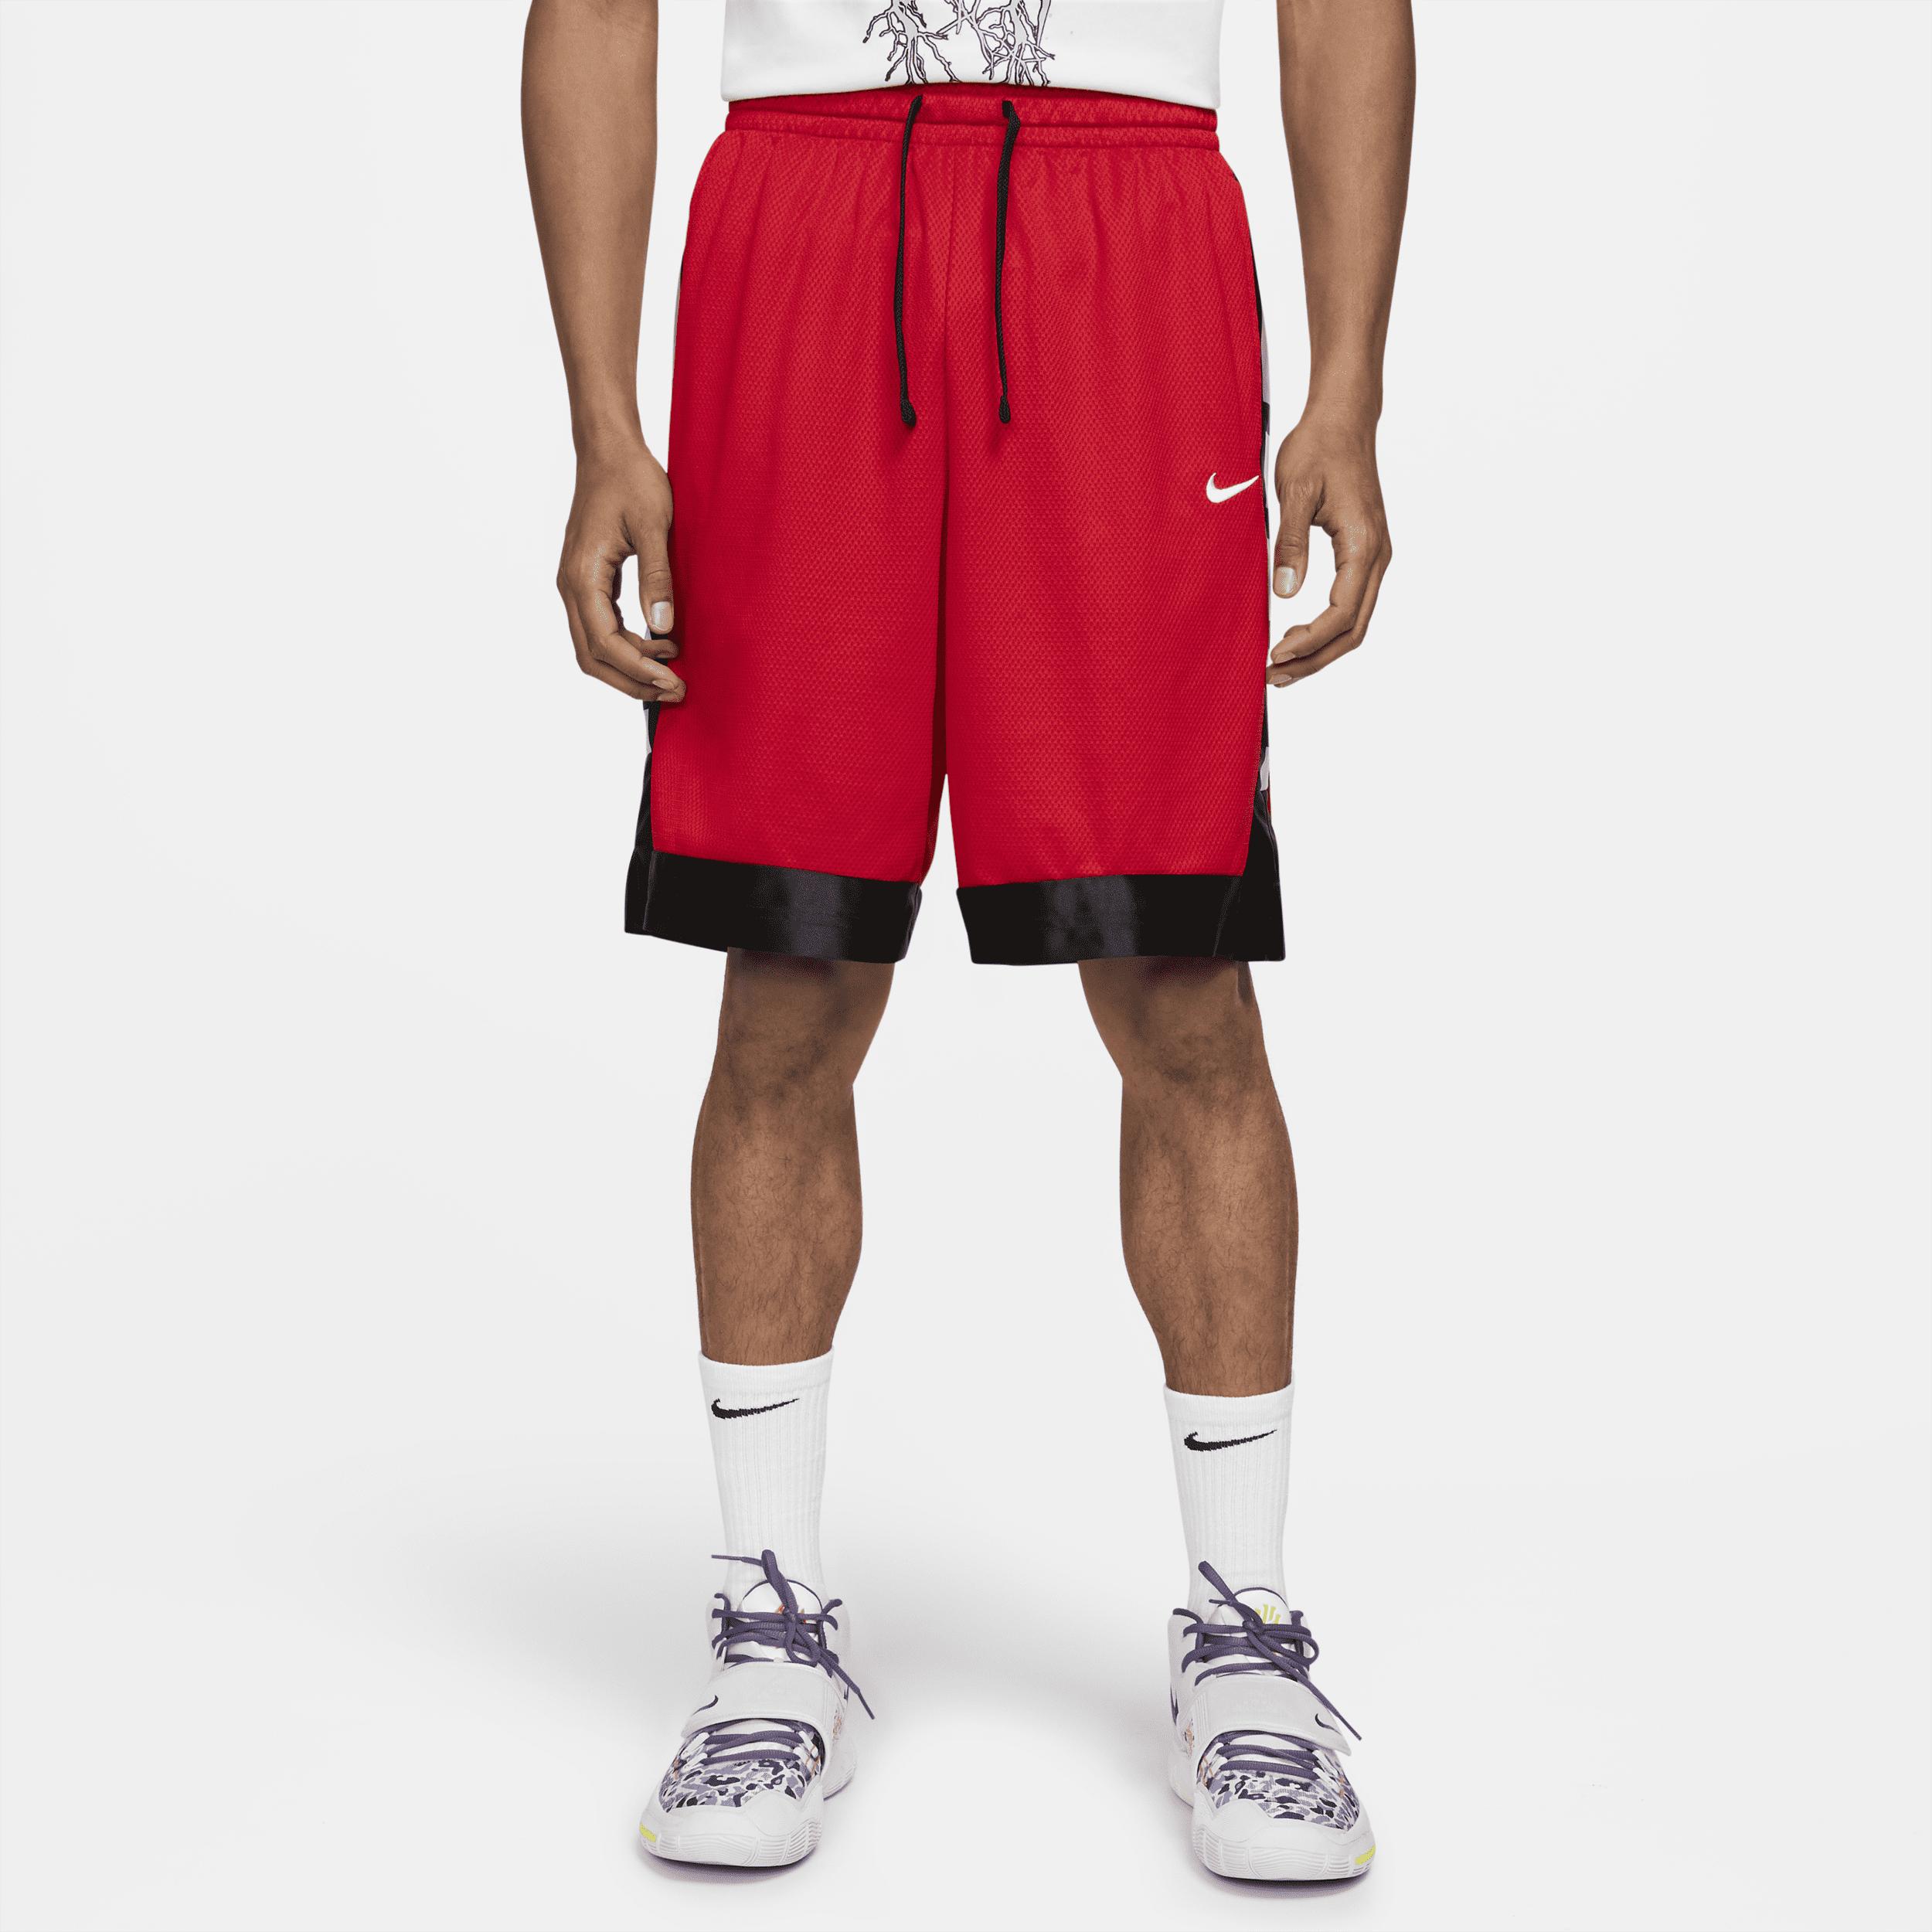 Nike Dri-fit Elite Stripe Basketball Shorts In Red, for Men | Lyst